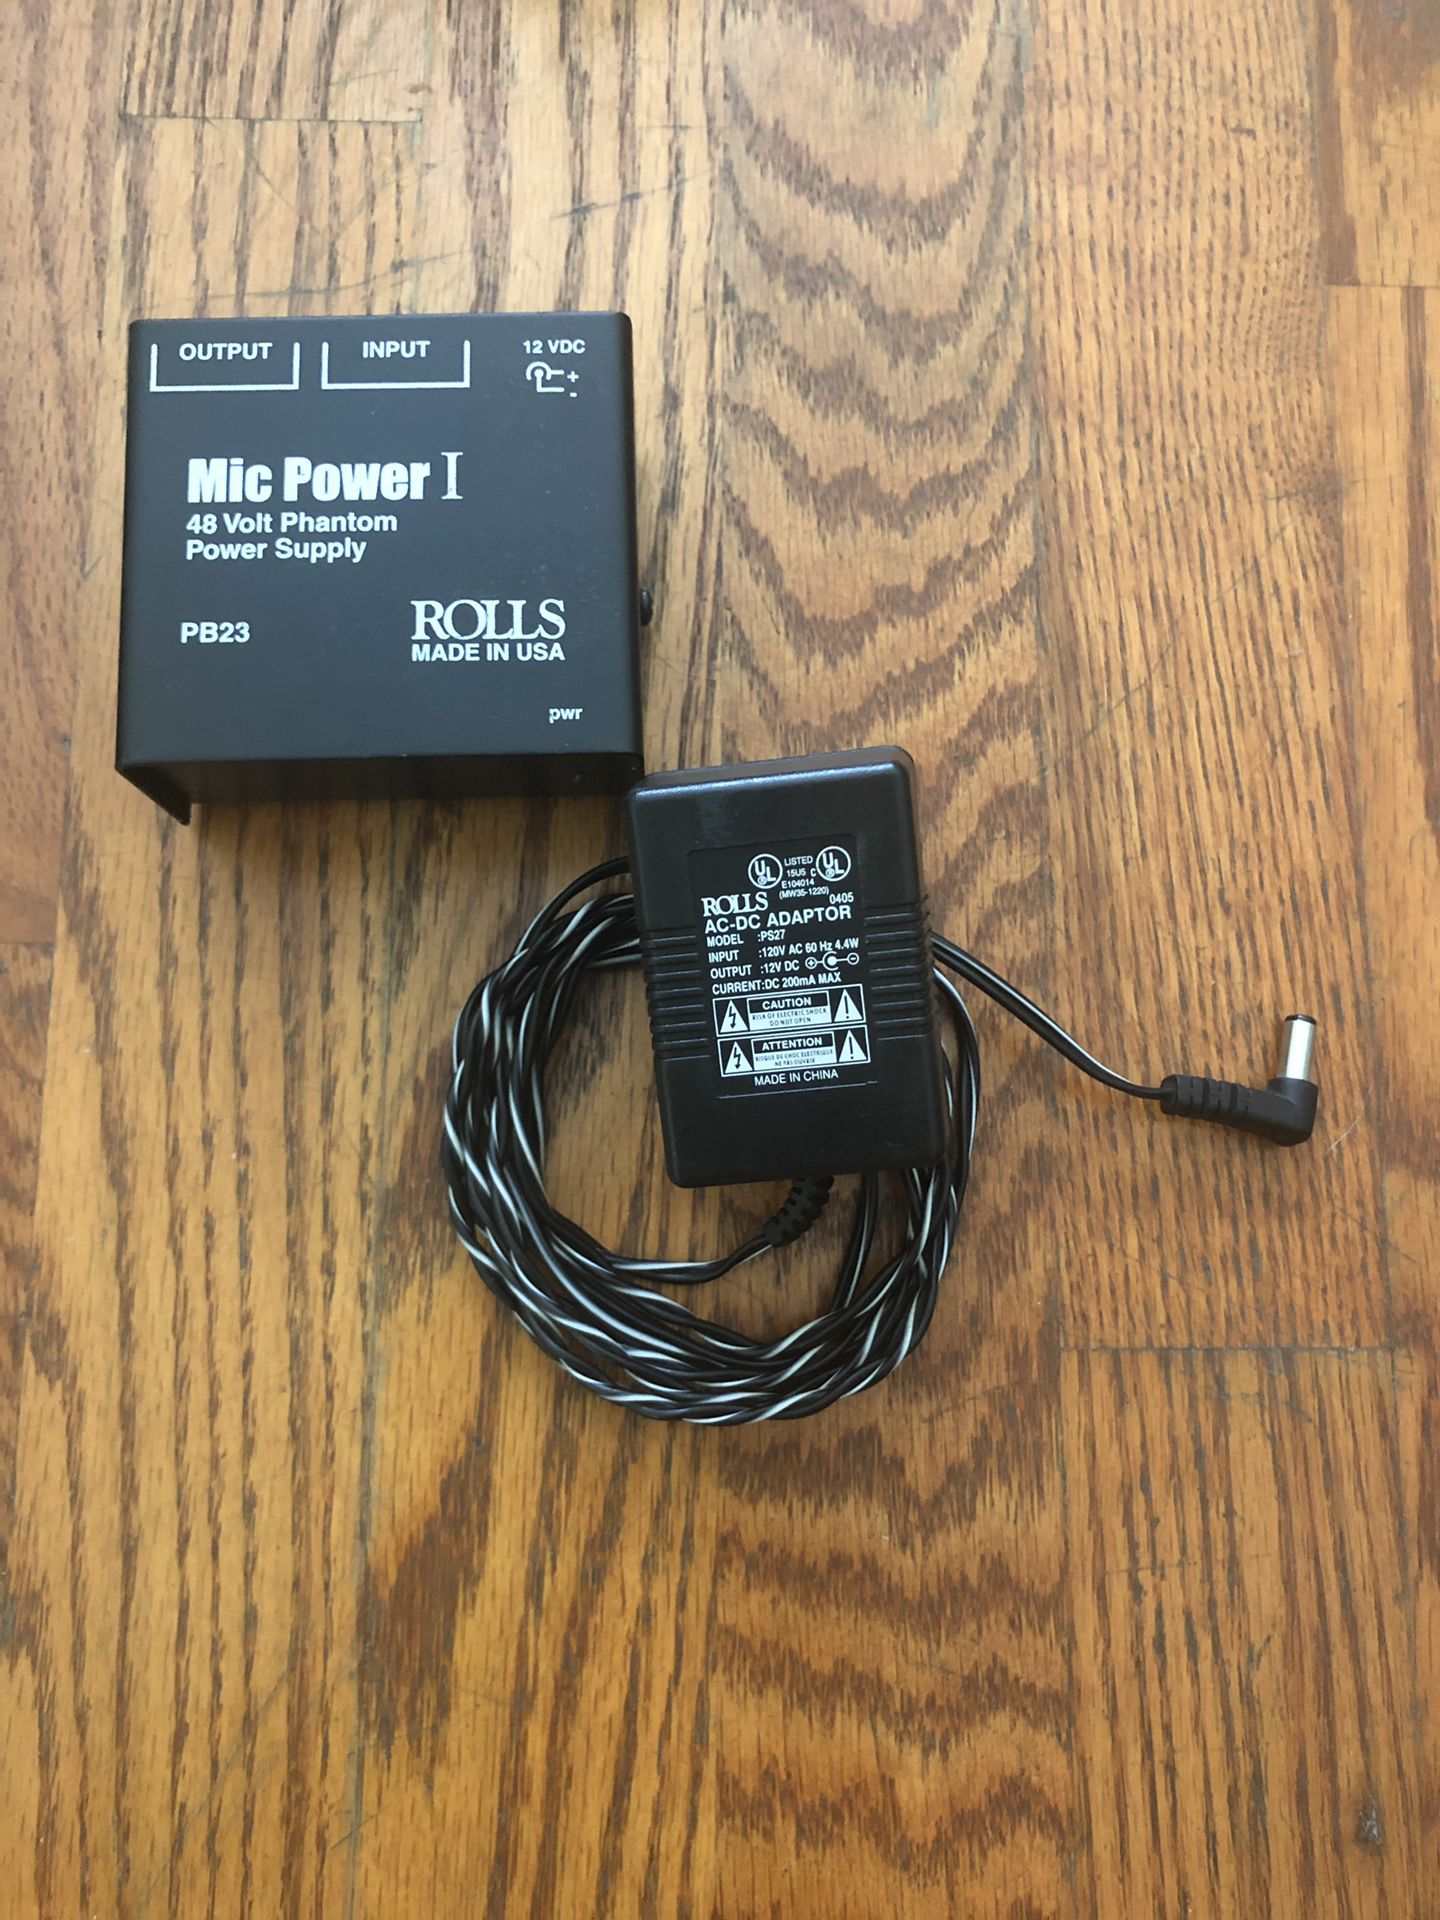 rolls mic power 1 48 volt phantom power supply pb23 used + ac/dc power adapter